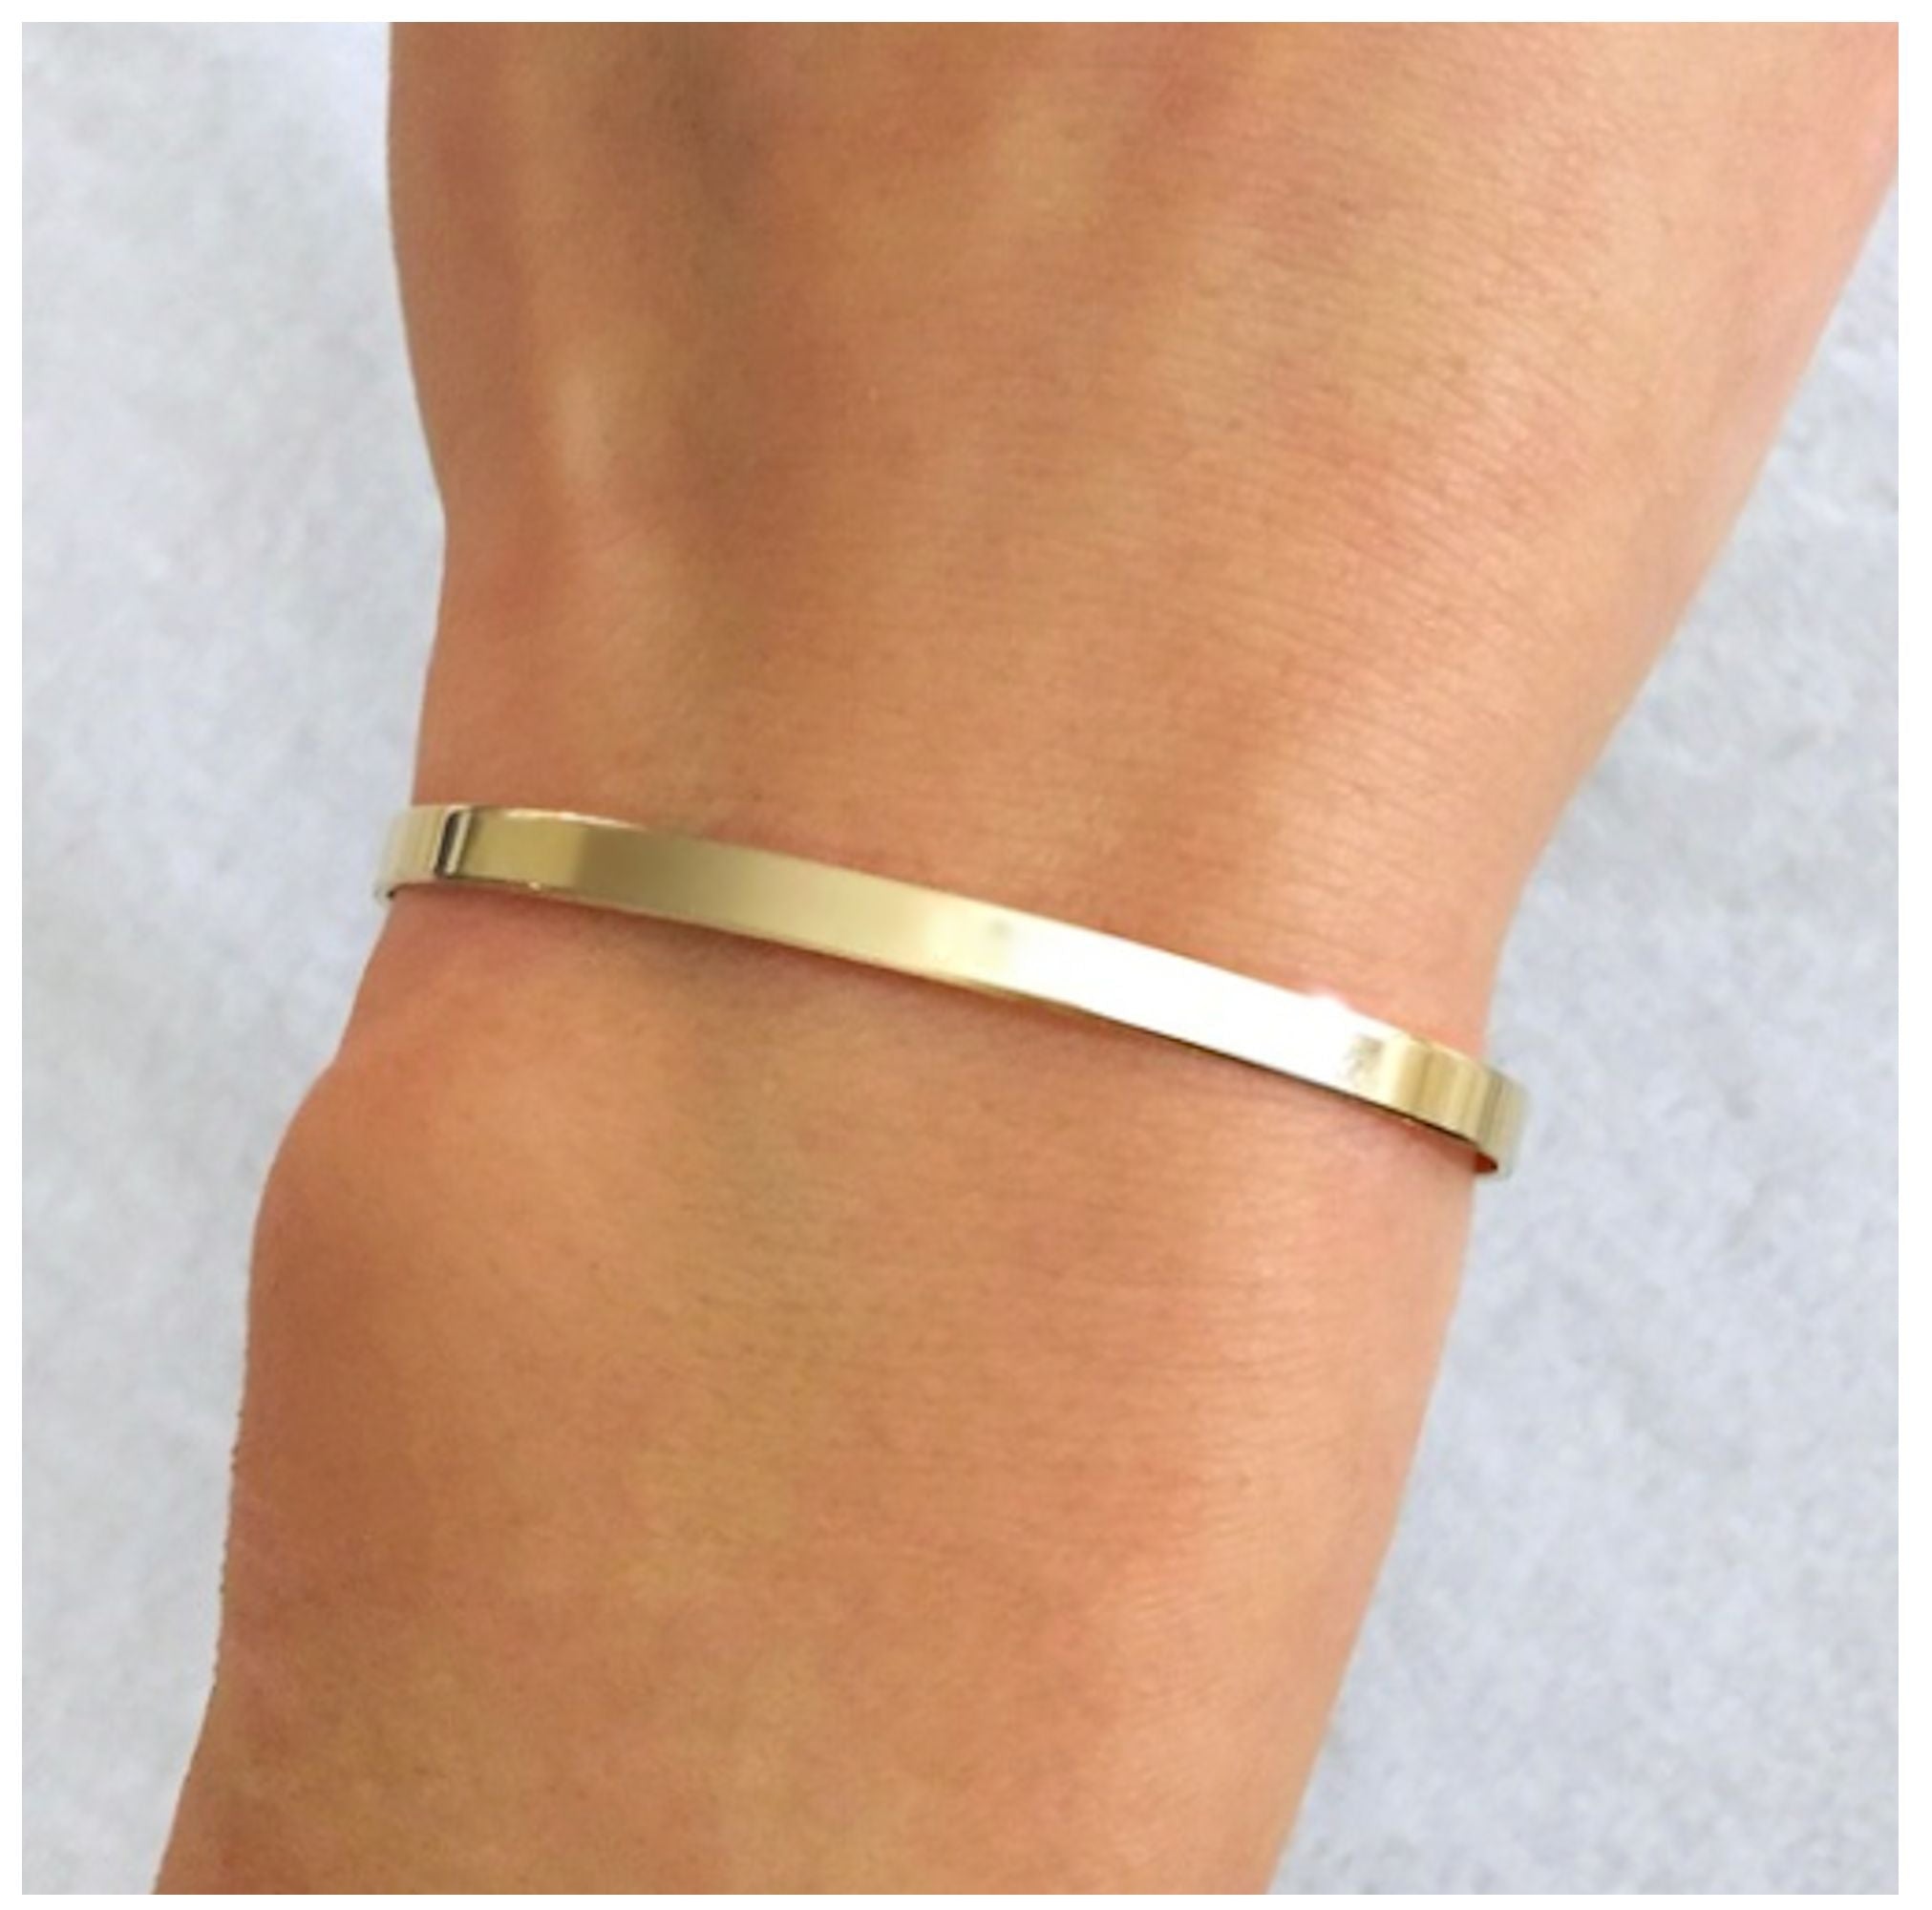 TOP 20 Gold Bracelet Designs For Women - Style Pro - YouTube | Bracelet  designs, Golden bracelet designs, Gold bracelet